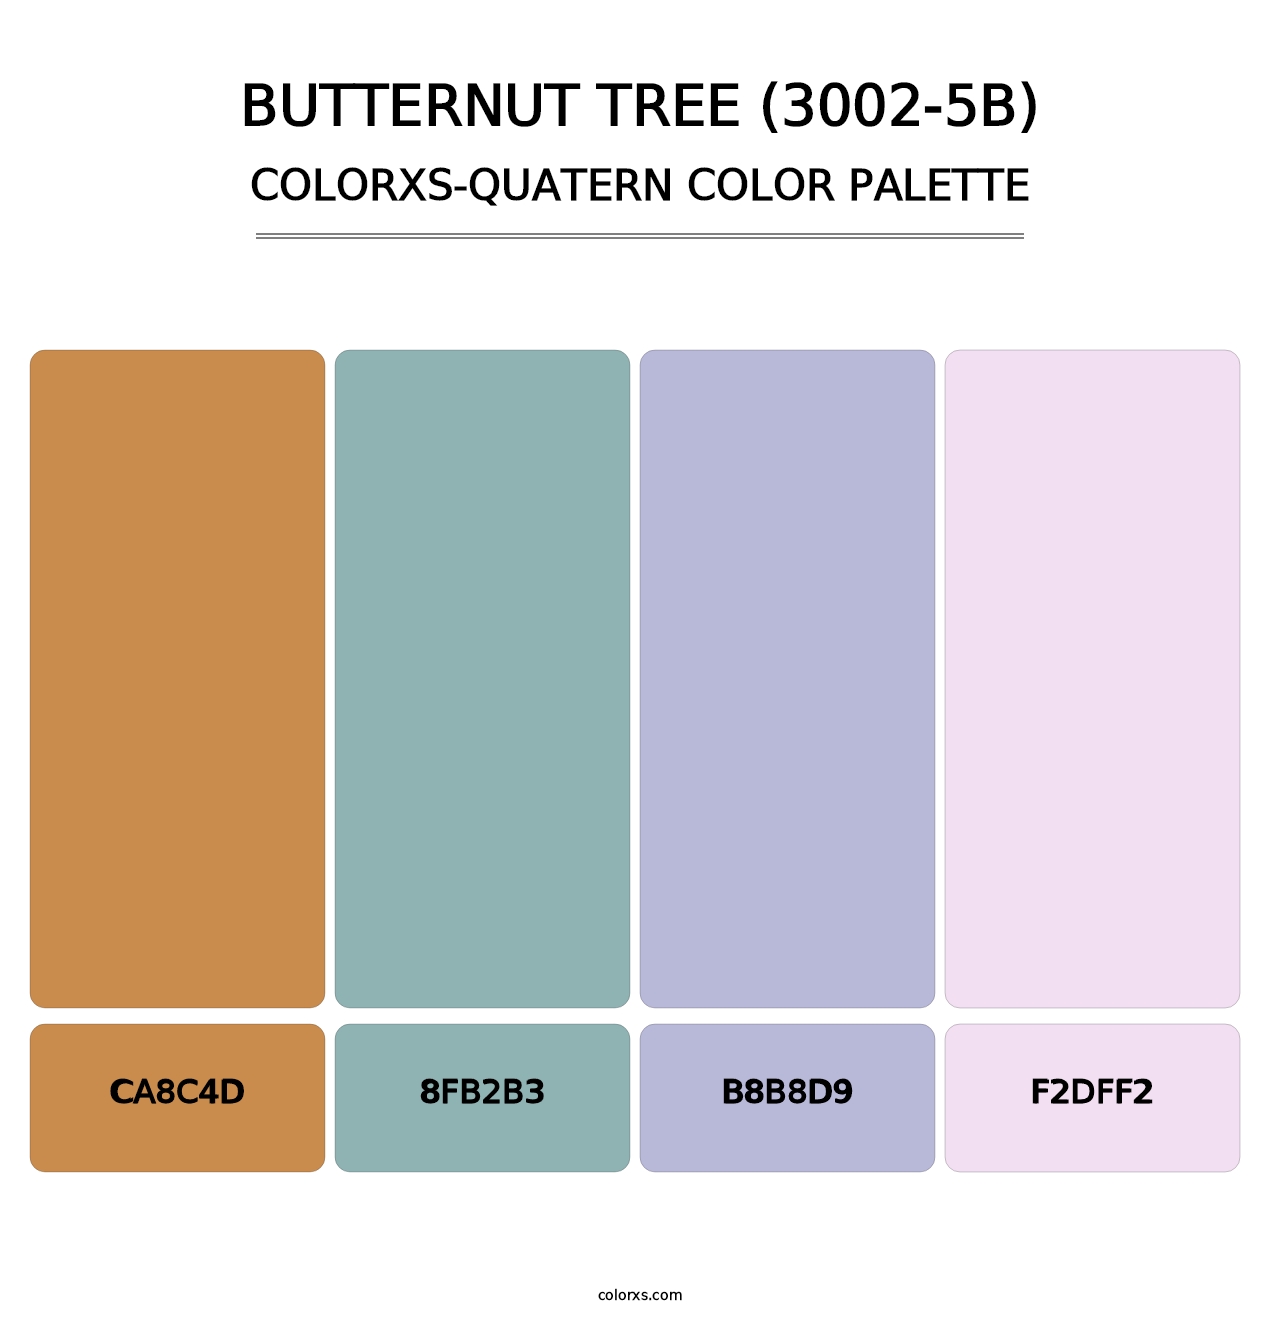 Butternut Tree (3002-5B) - Colorxs Quatern Palette